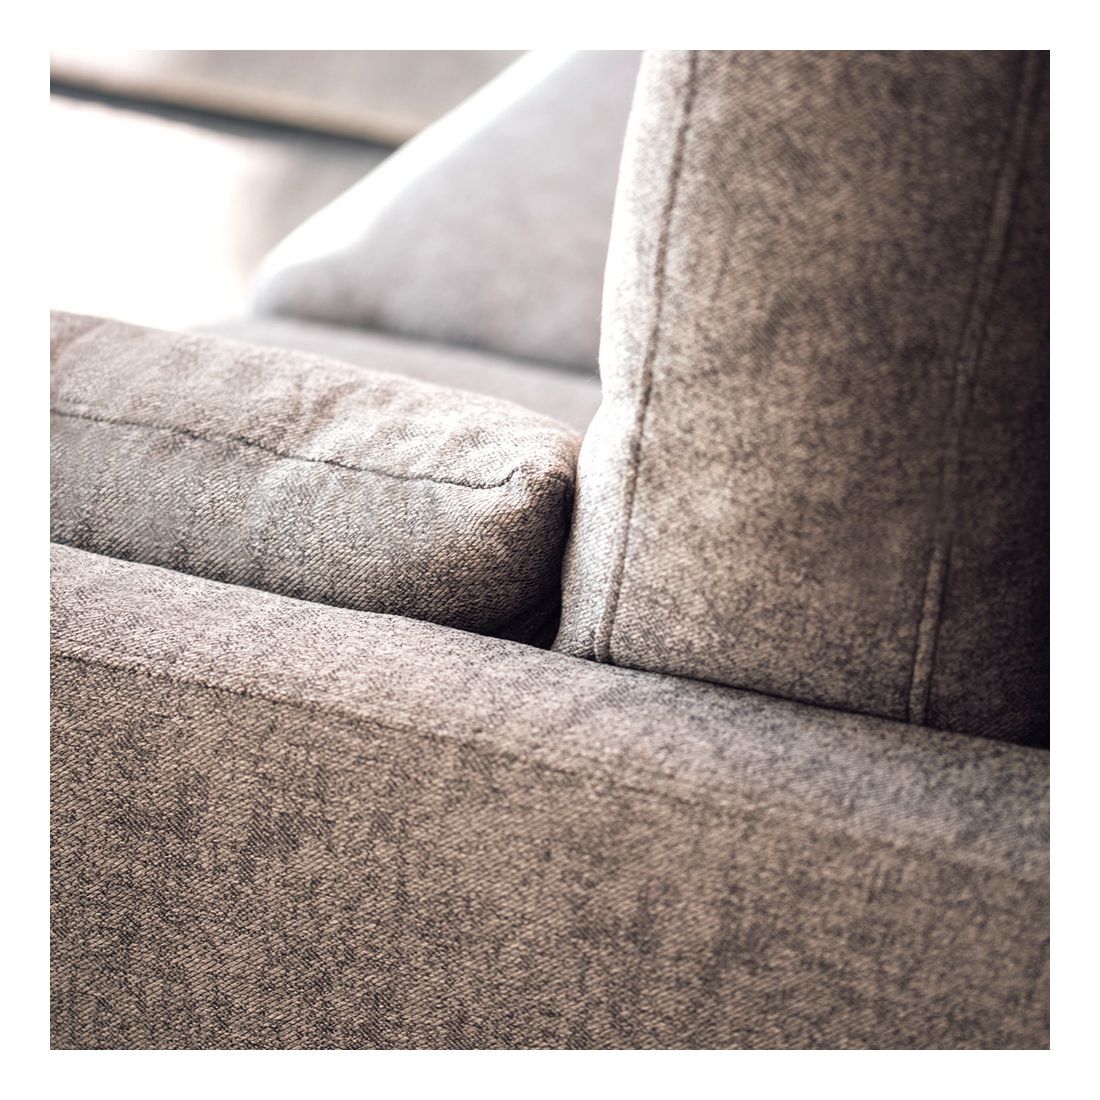 Astan Hogar gray 3-seater sofa bed 